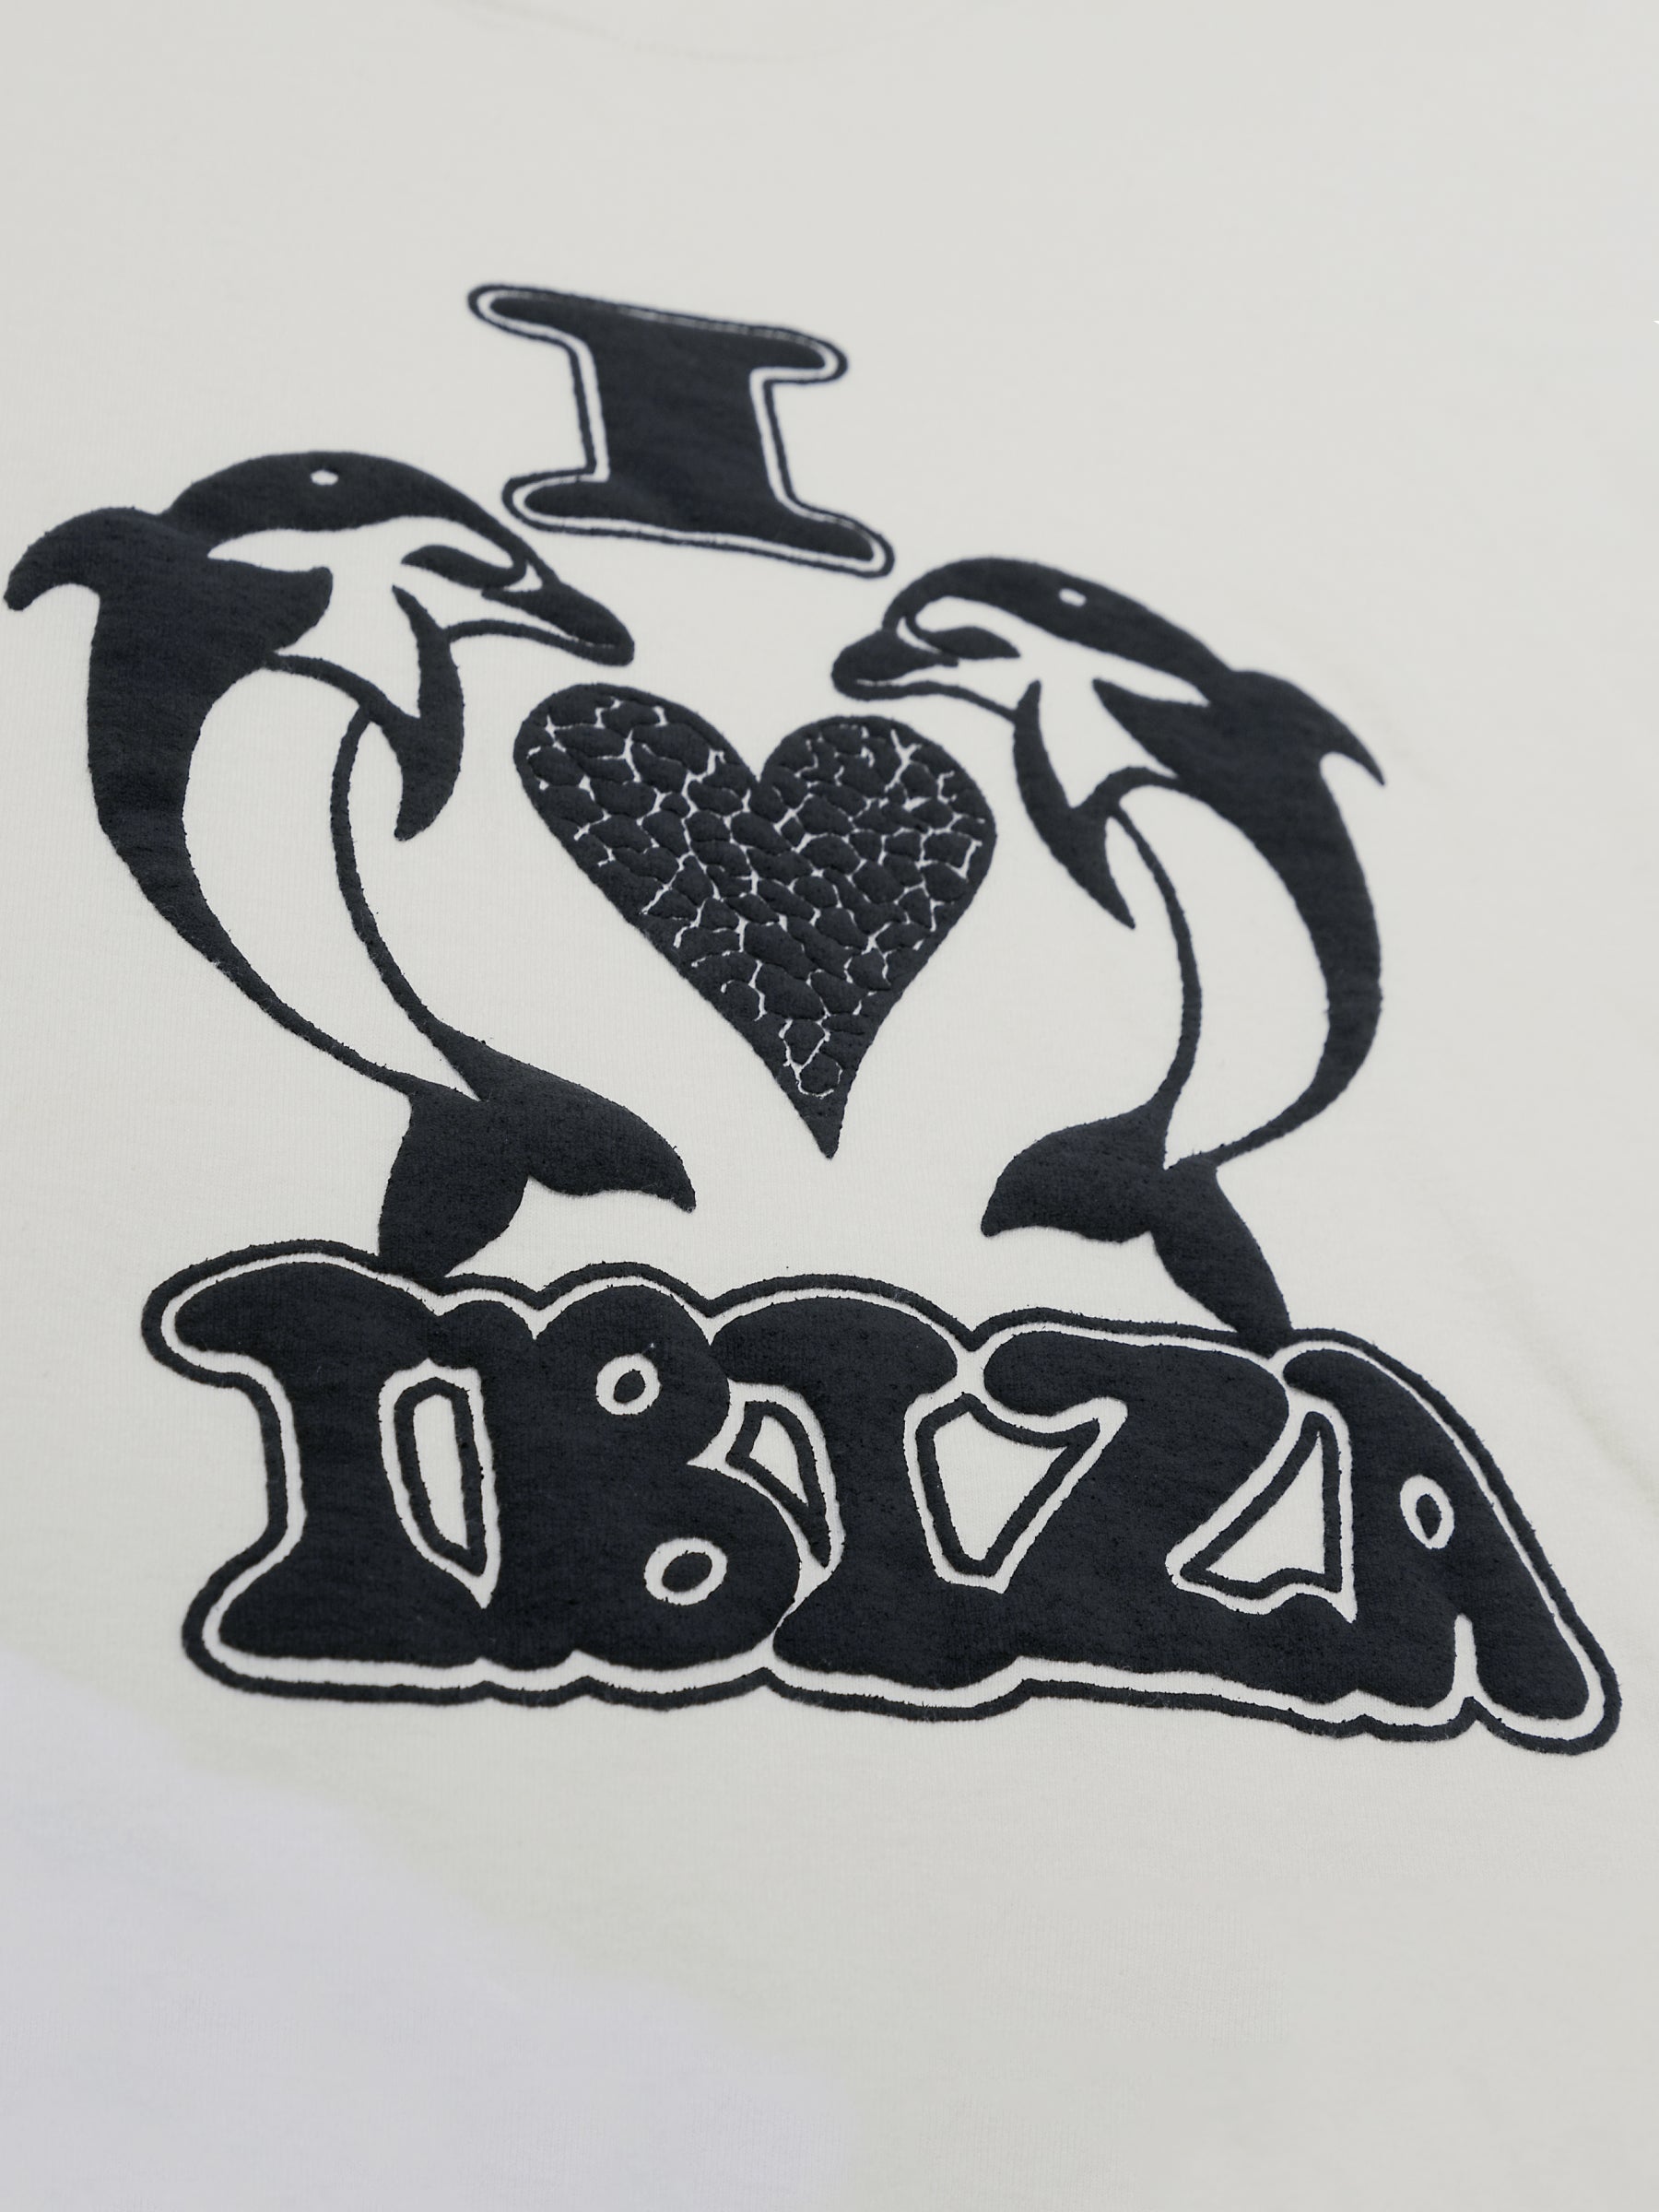 I LOVE IBIZA T-SHIRT